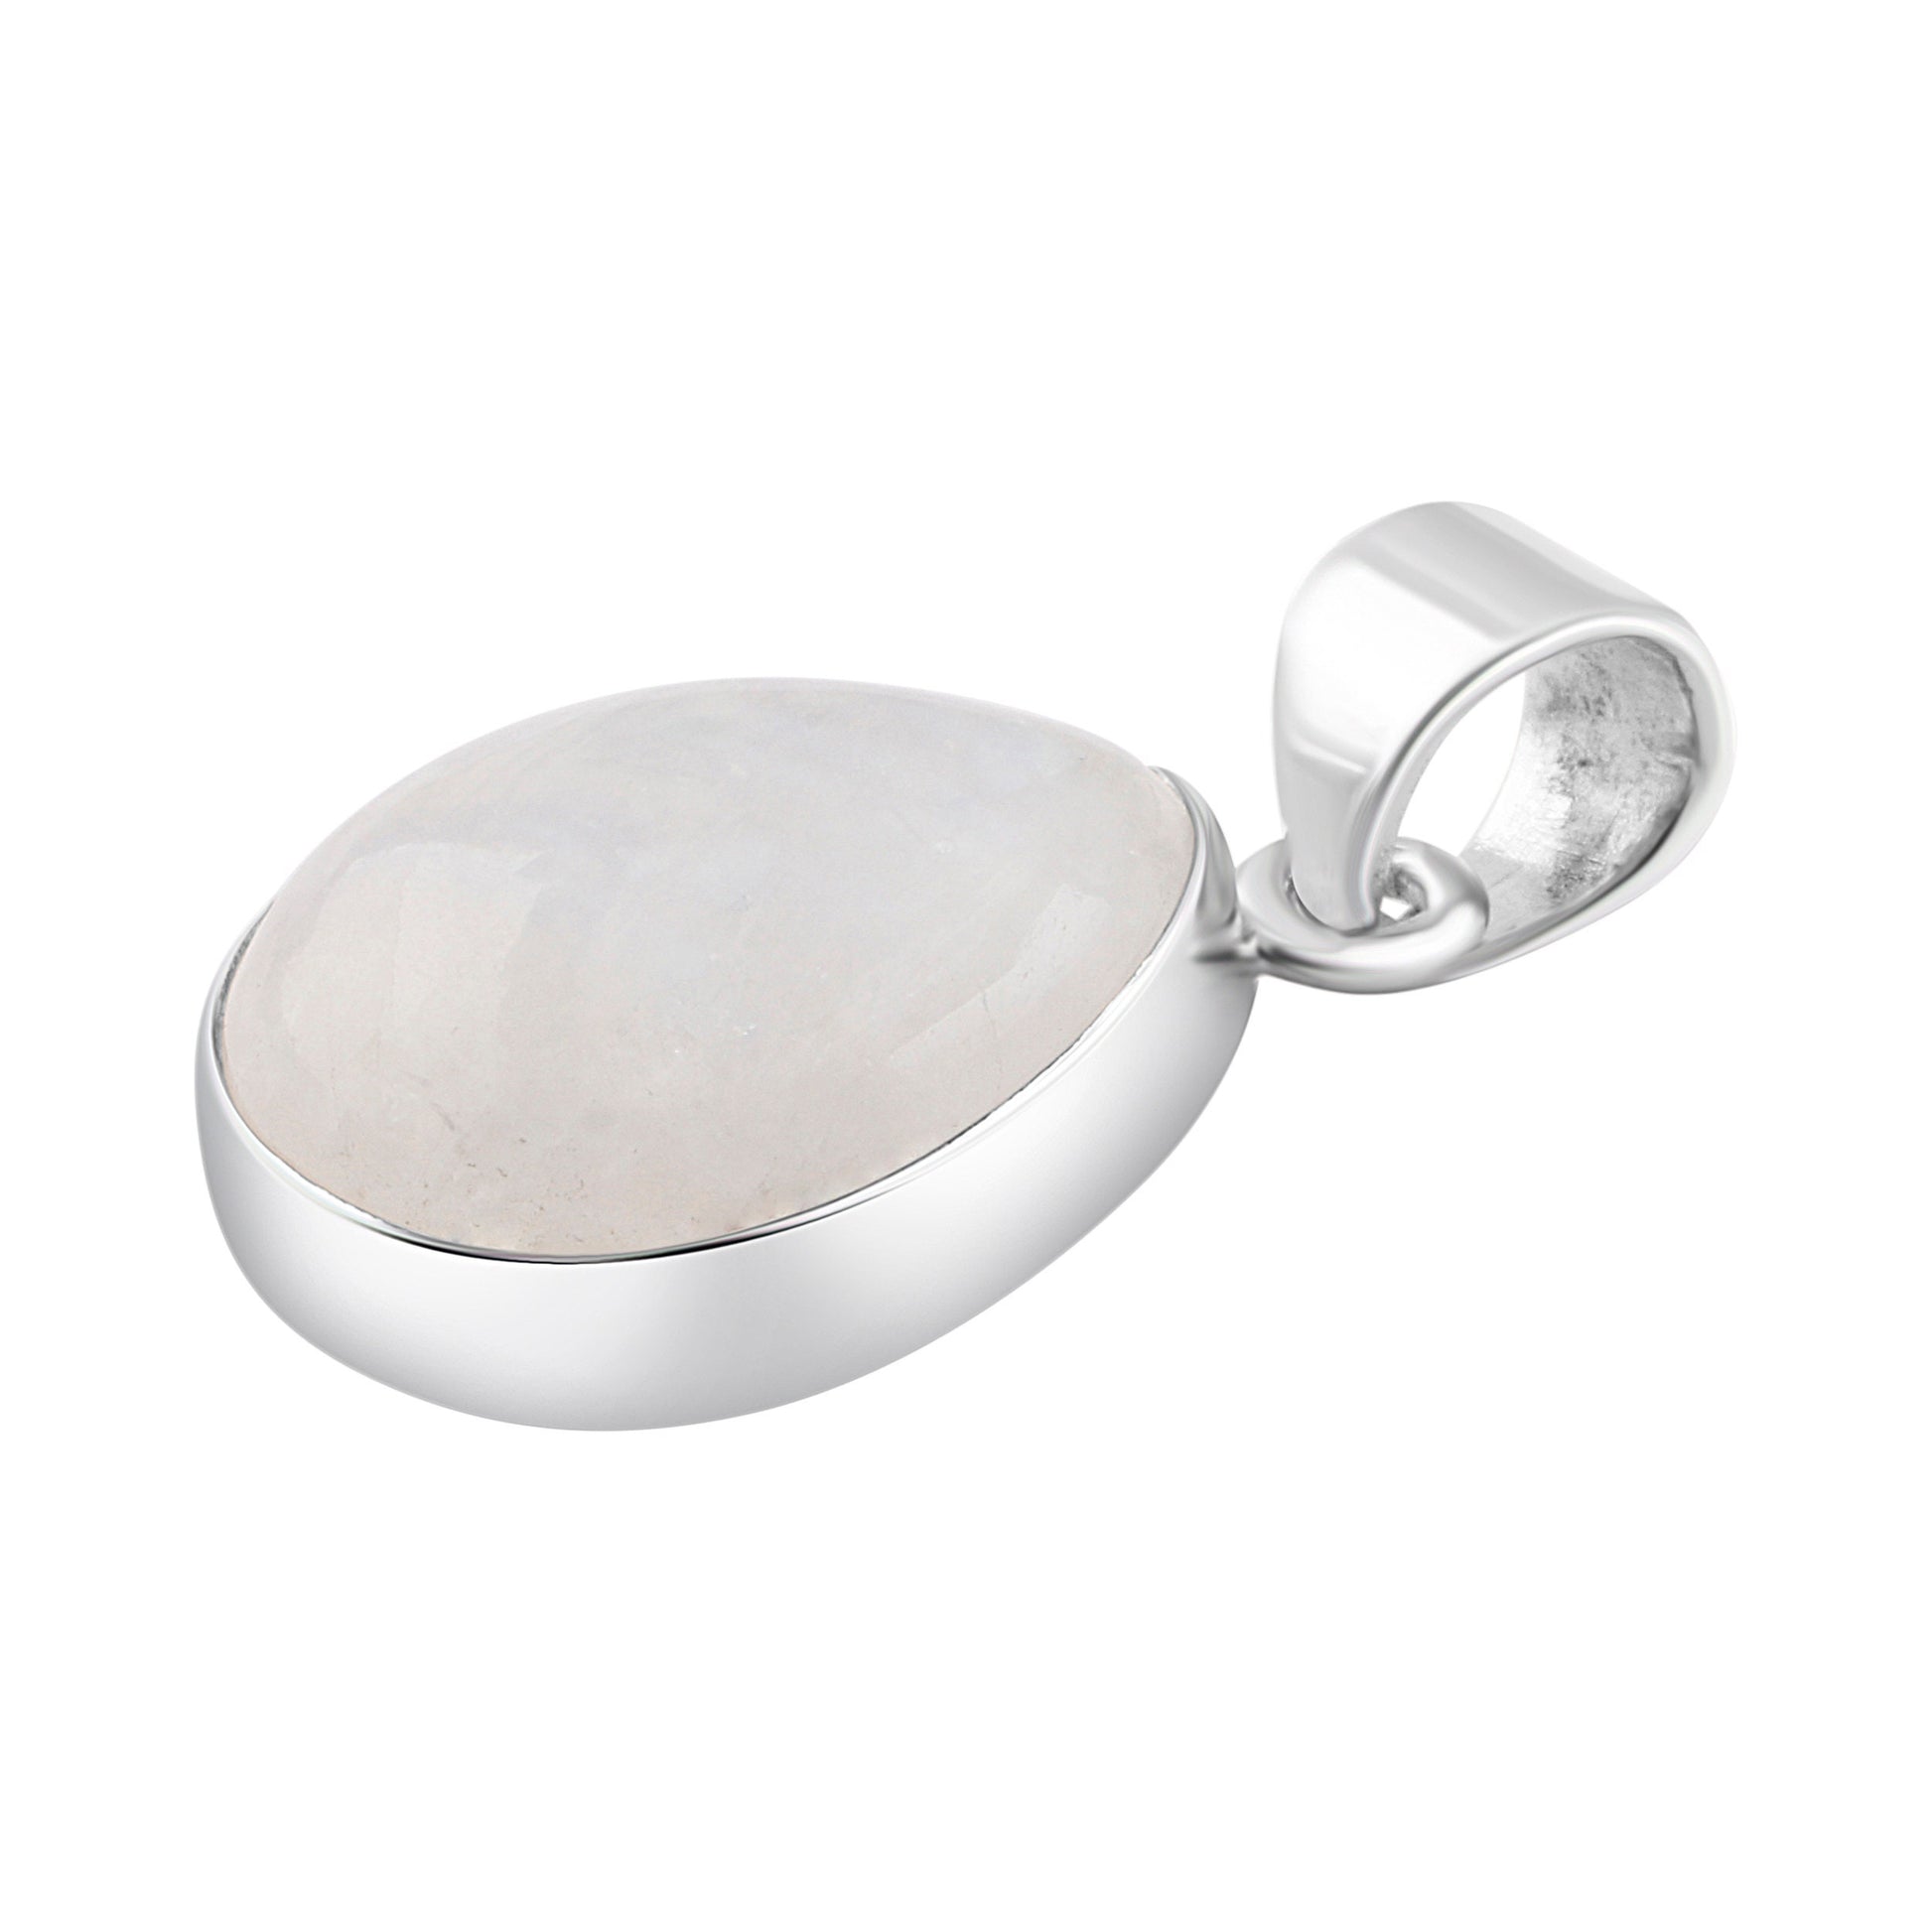 Moonstone (white) gemstone pear/teardrop/leaf shaped Solid Sterling Silver Minimalist necklace pendant, Cancer Zodiac Birthstone, Australia, Zorbajewellers